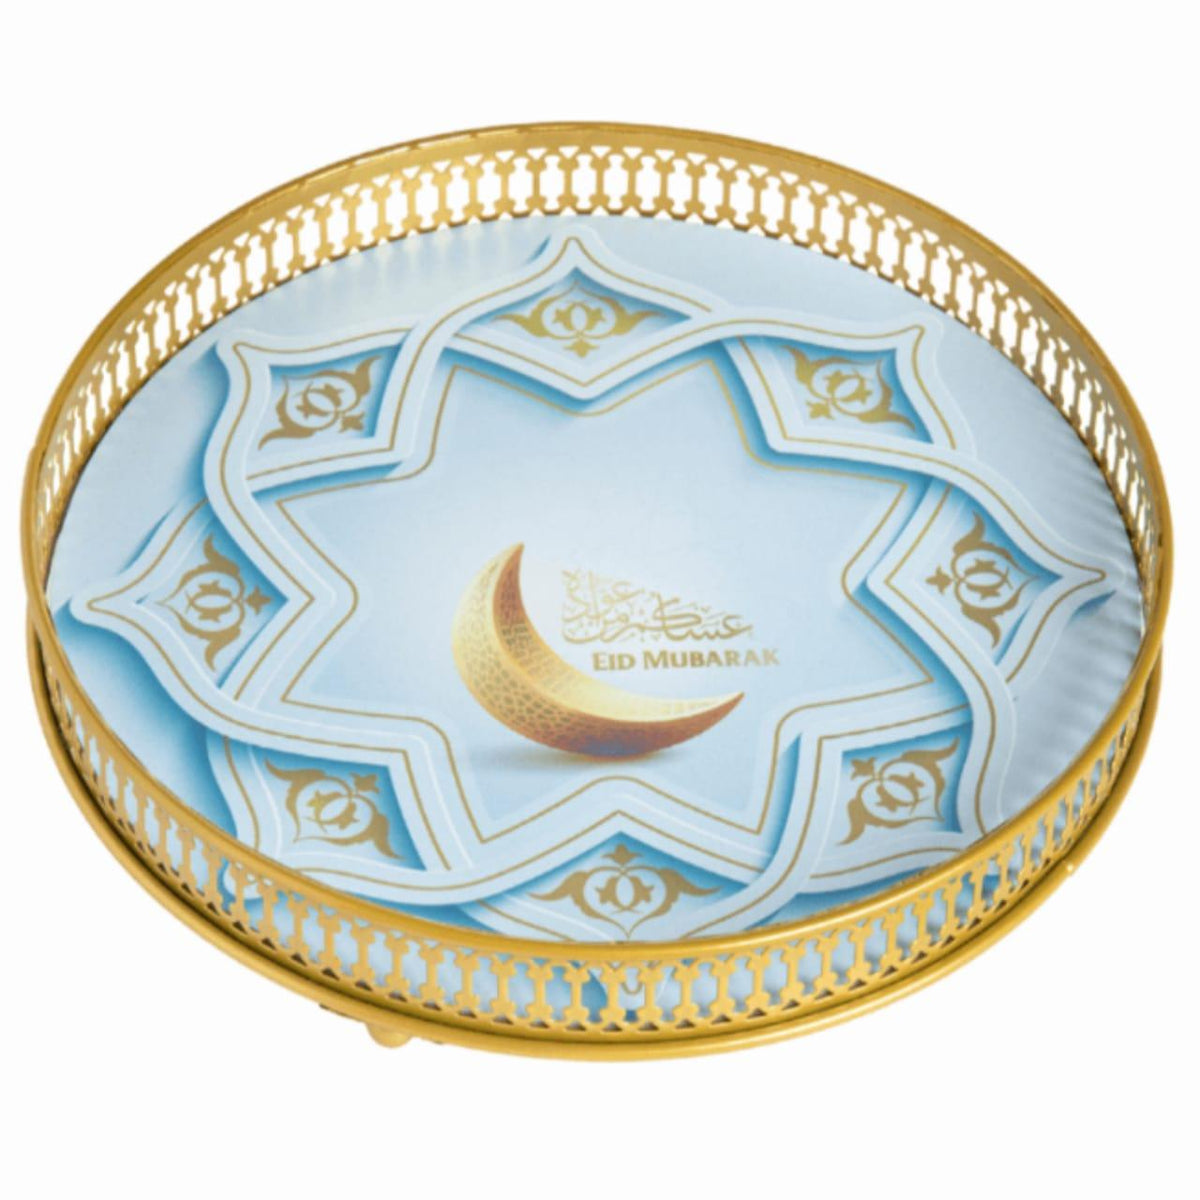 HILALFUL Eid Mubarak Tray - Circular Design